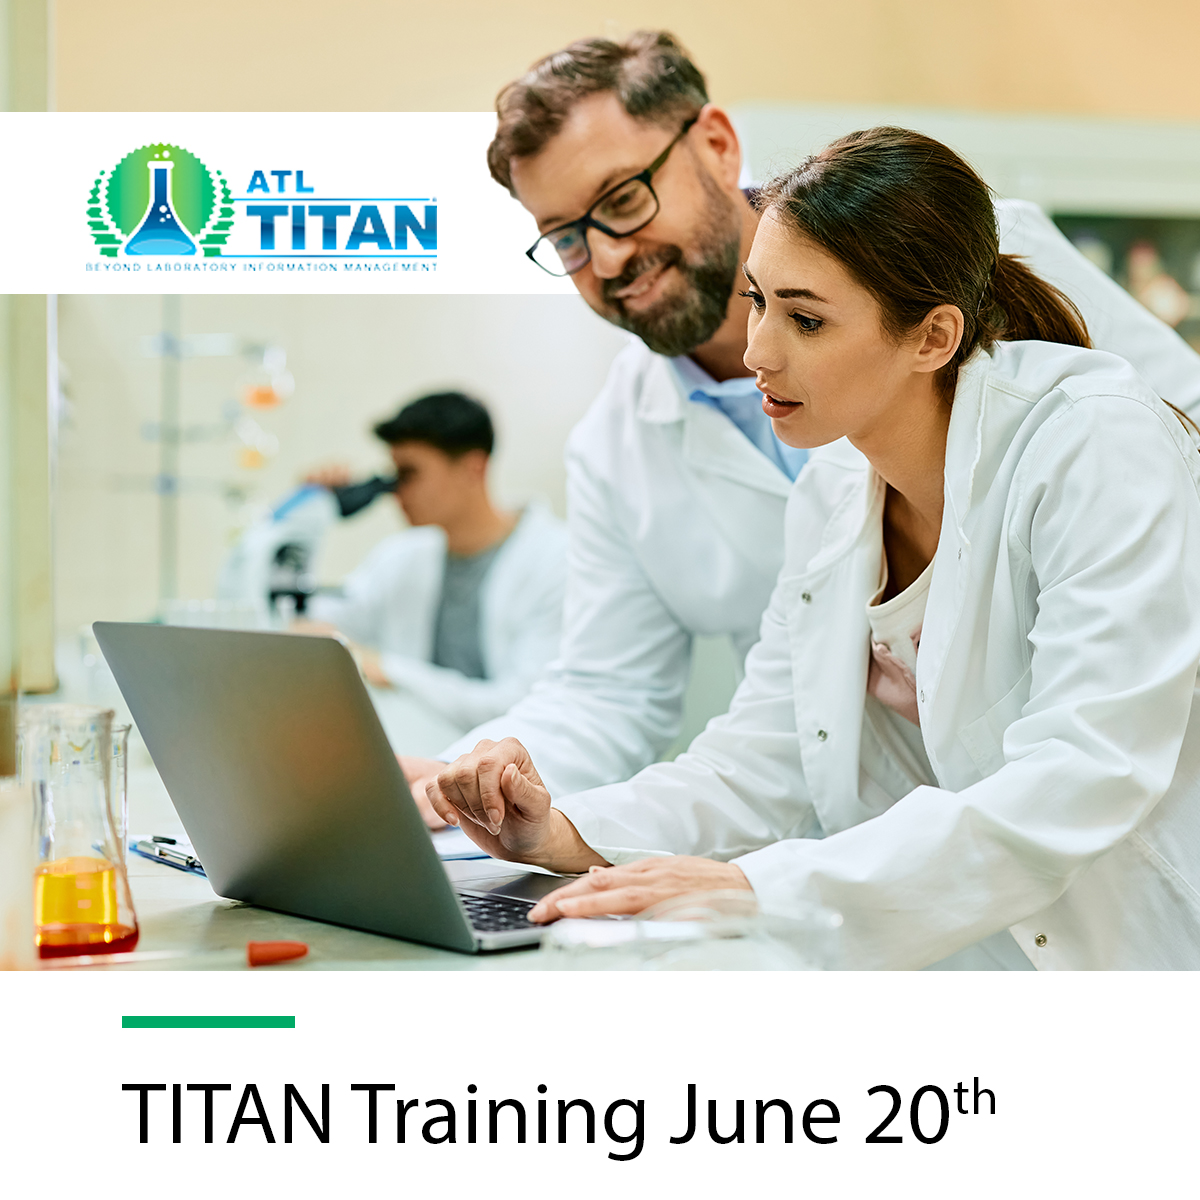 atl titan training june 20